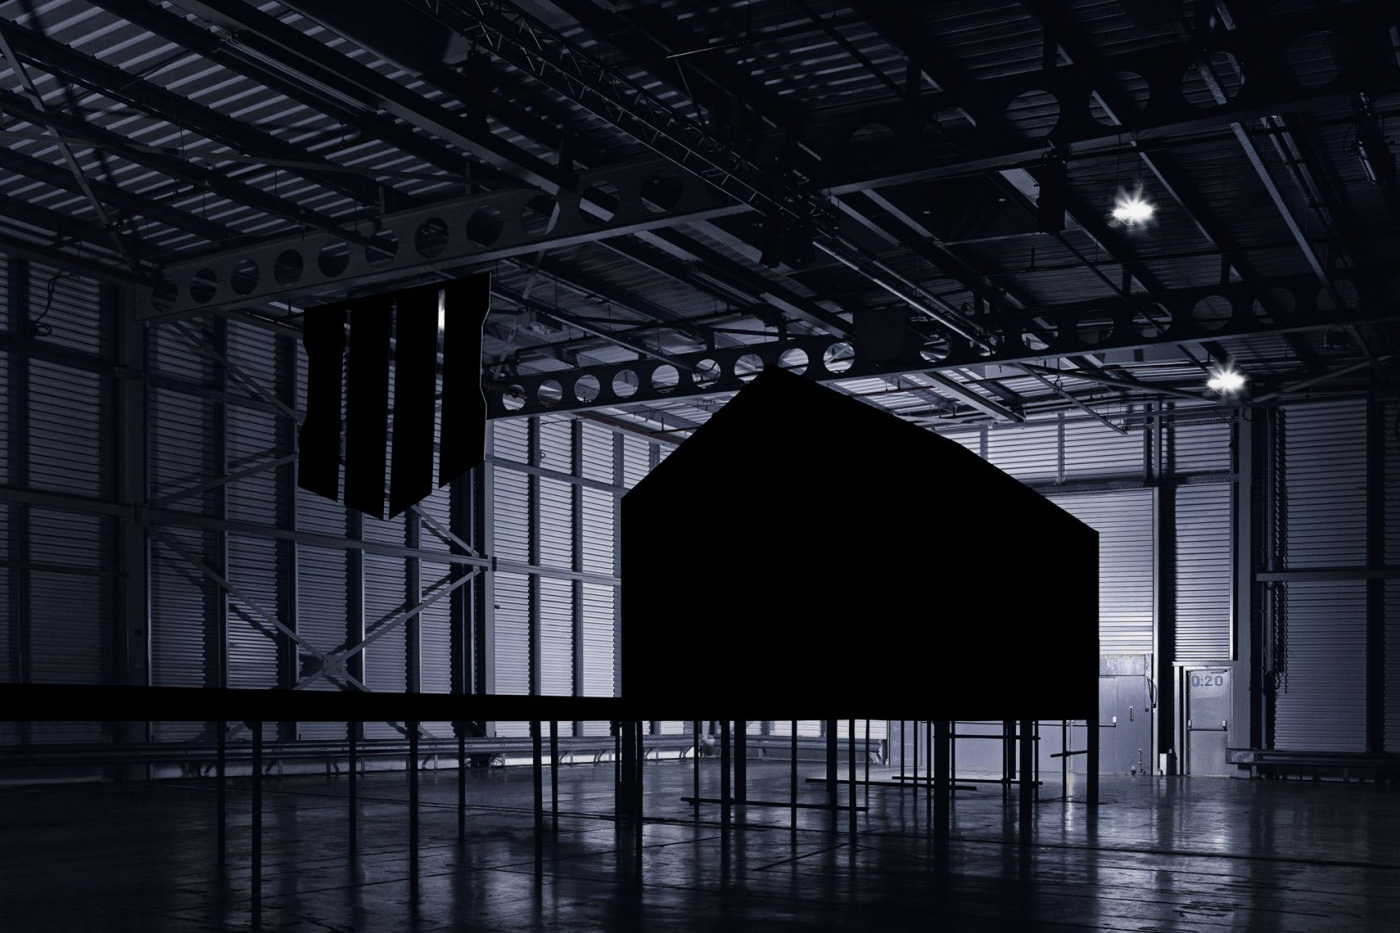 Vantablack, the World's Darkest Material, Makes Gaming Amazing